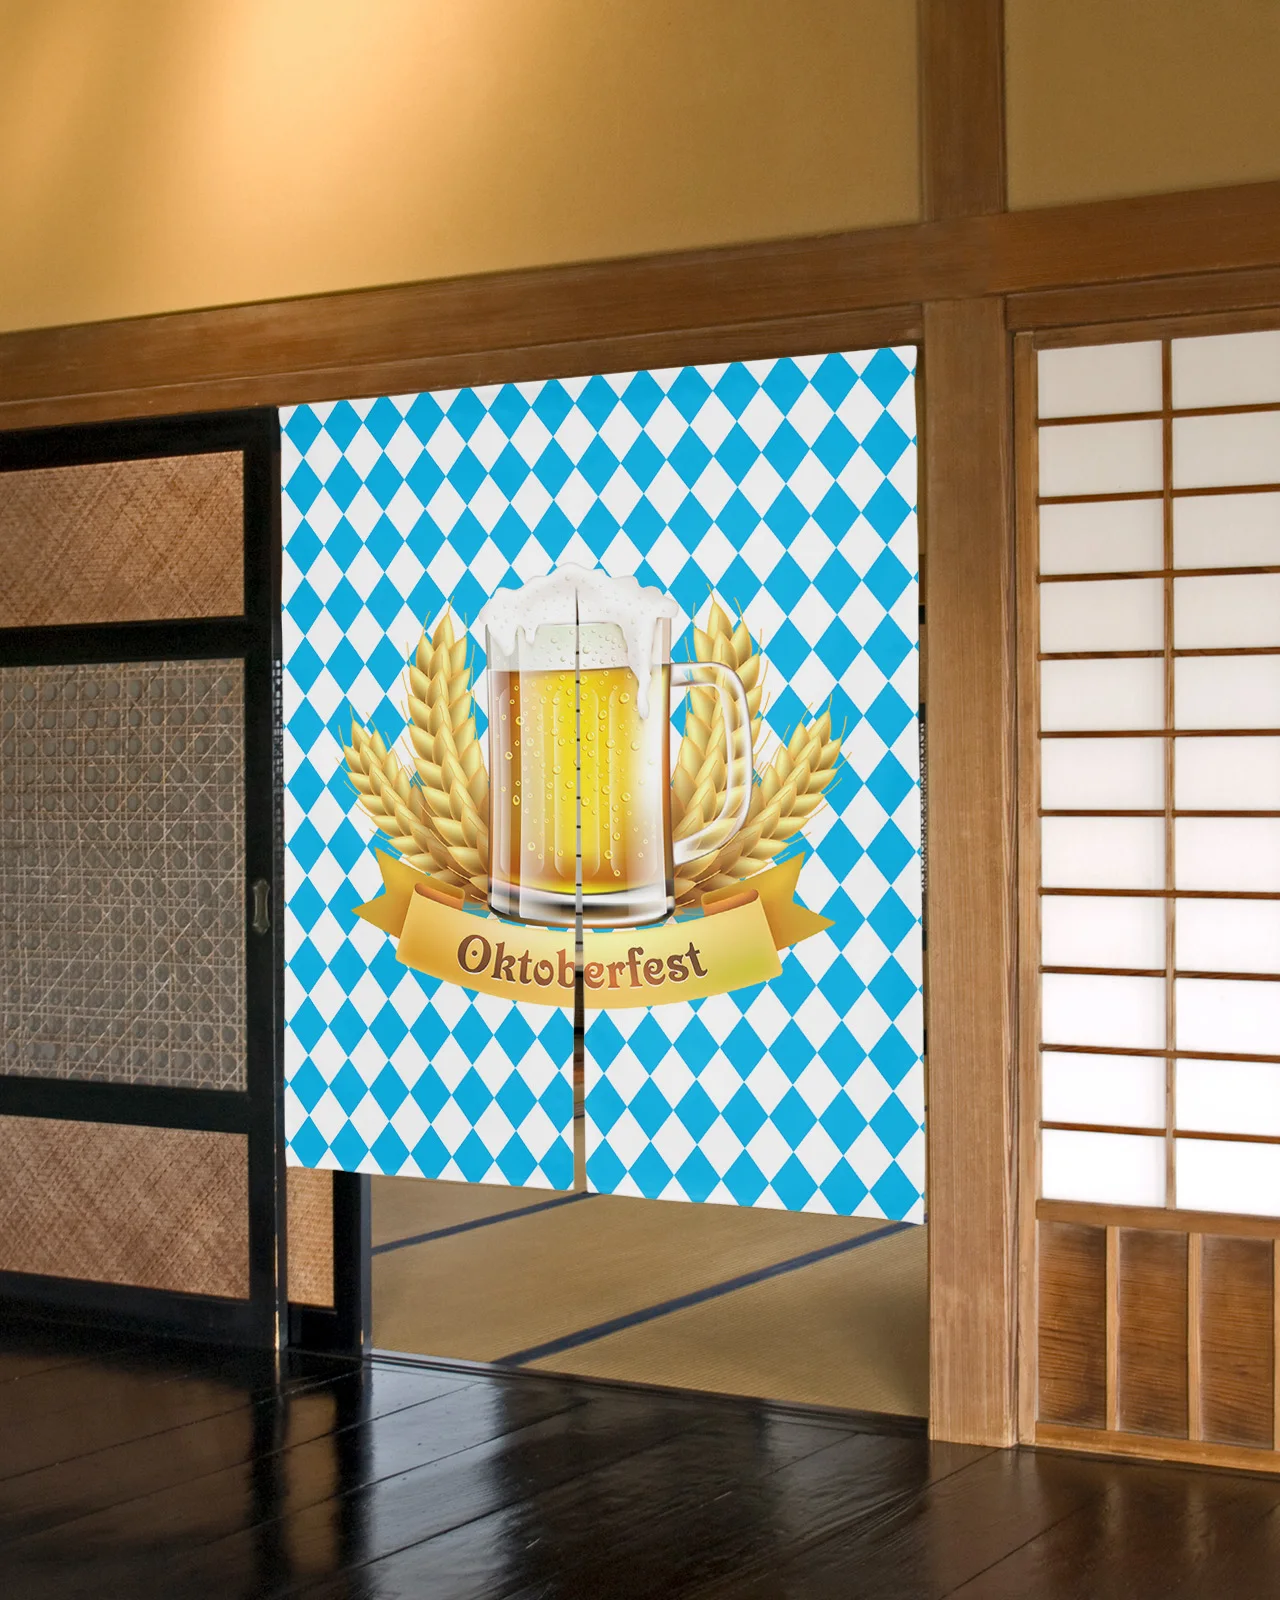 

Oktoberfest Wheat Beer Plaid Japanese Door Curtain Bedroom Doorway Partition Curtains Restaurant Kitchen Decor Drapes